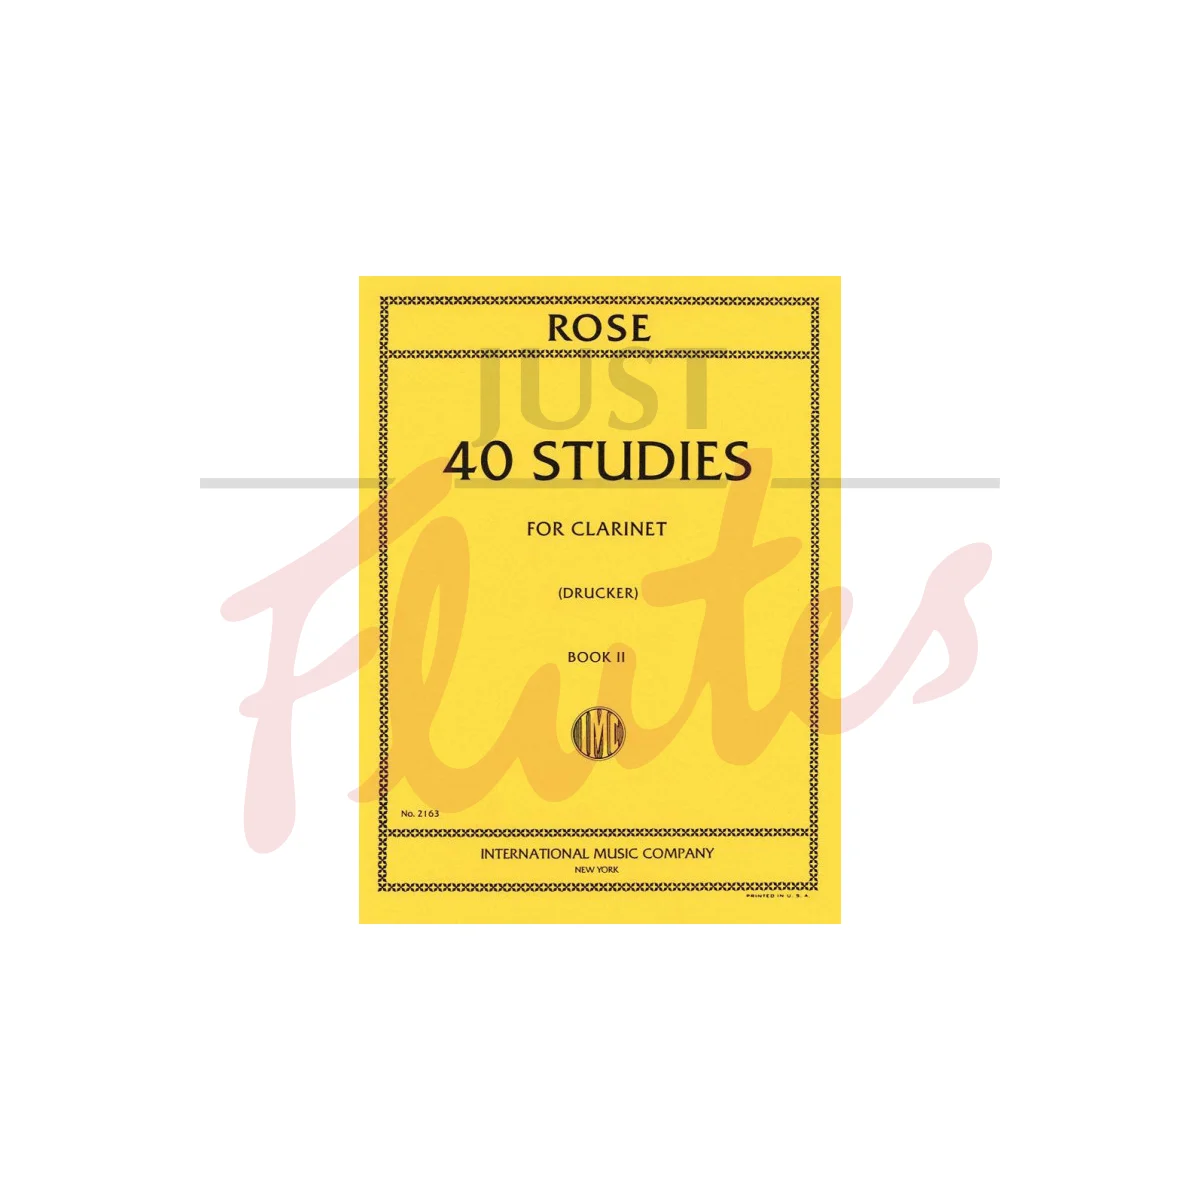 40 Studies for Clarinet, Vol. 2